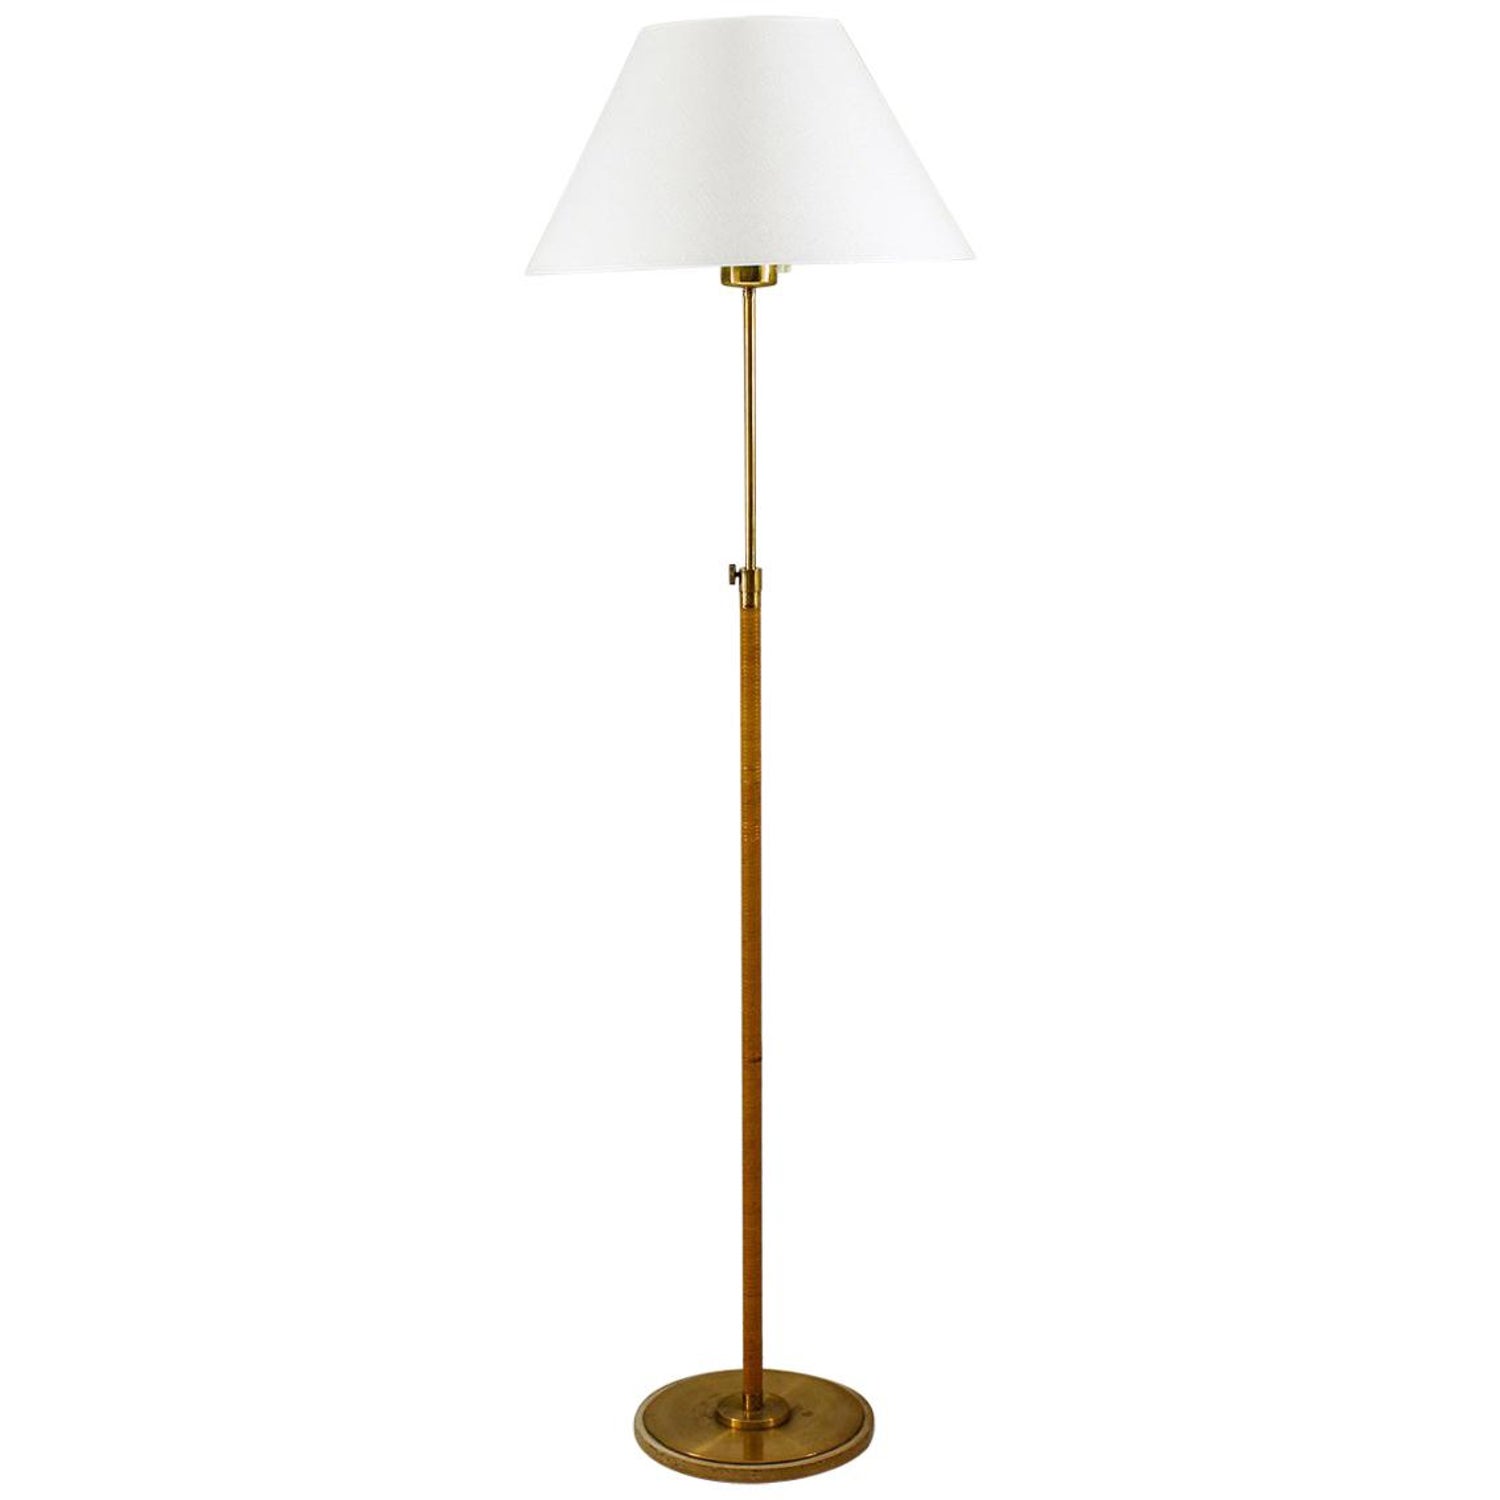 Swedish Modern Midcentury Floor Lamp In Brass And Rattan 1940s